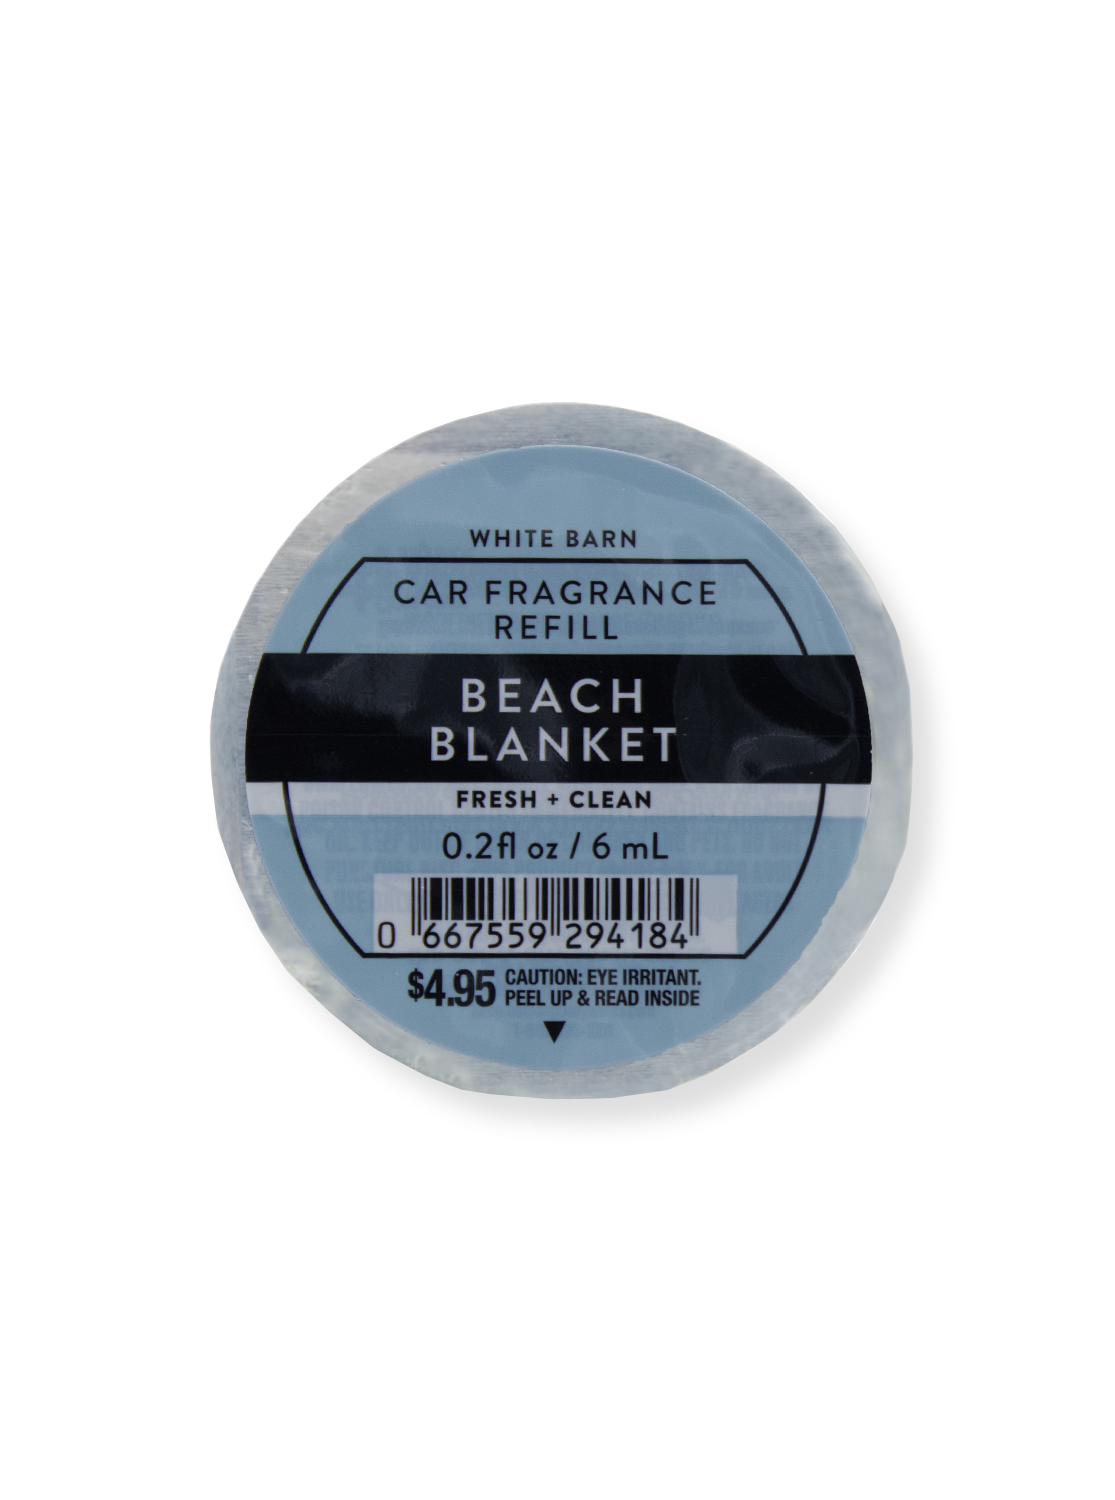 Air fresh freshness - Beach Blanket - 6ml